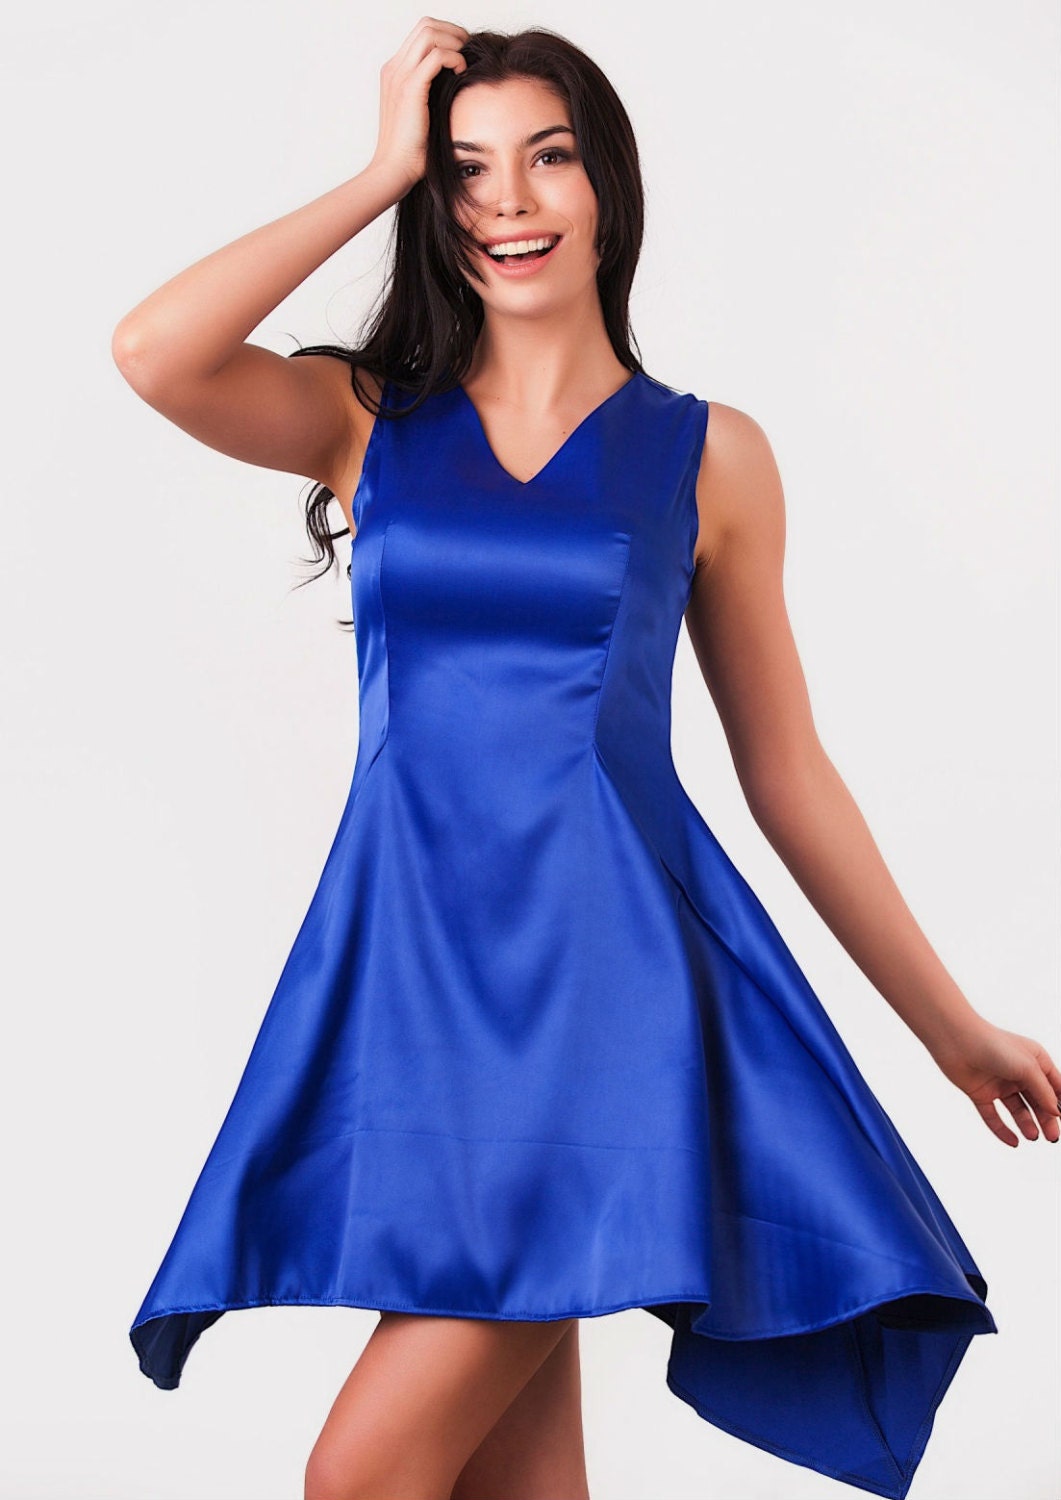 Royal blue Satin Summer Dress Asymmetric party dress